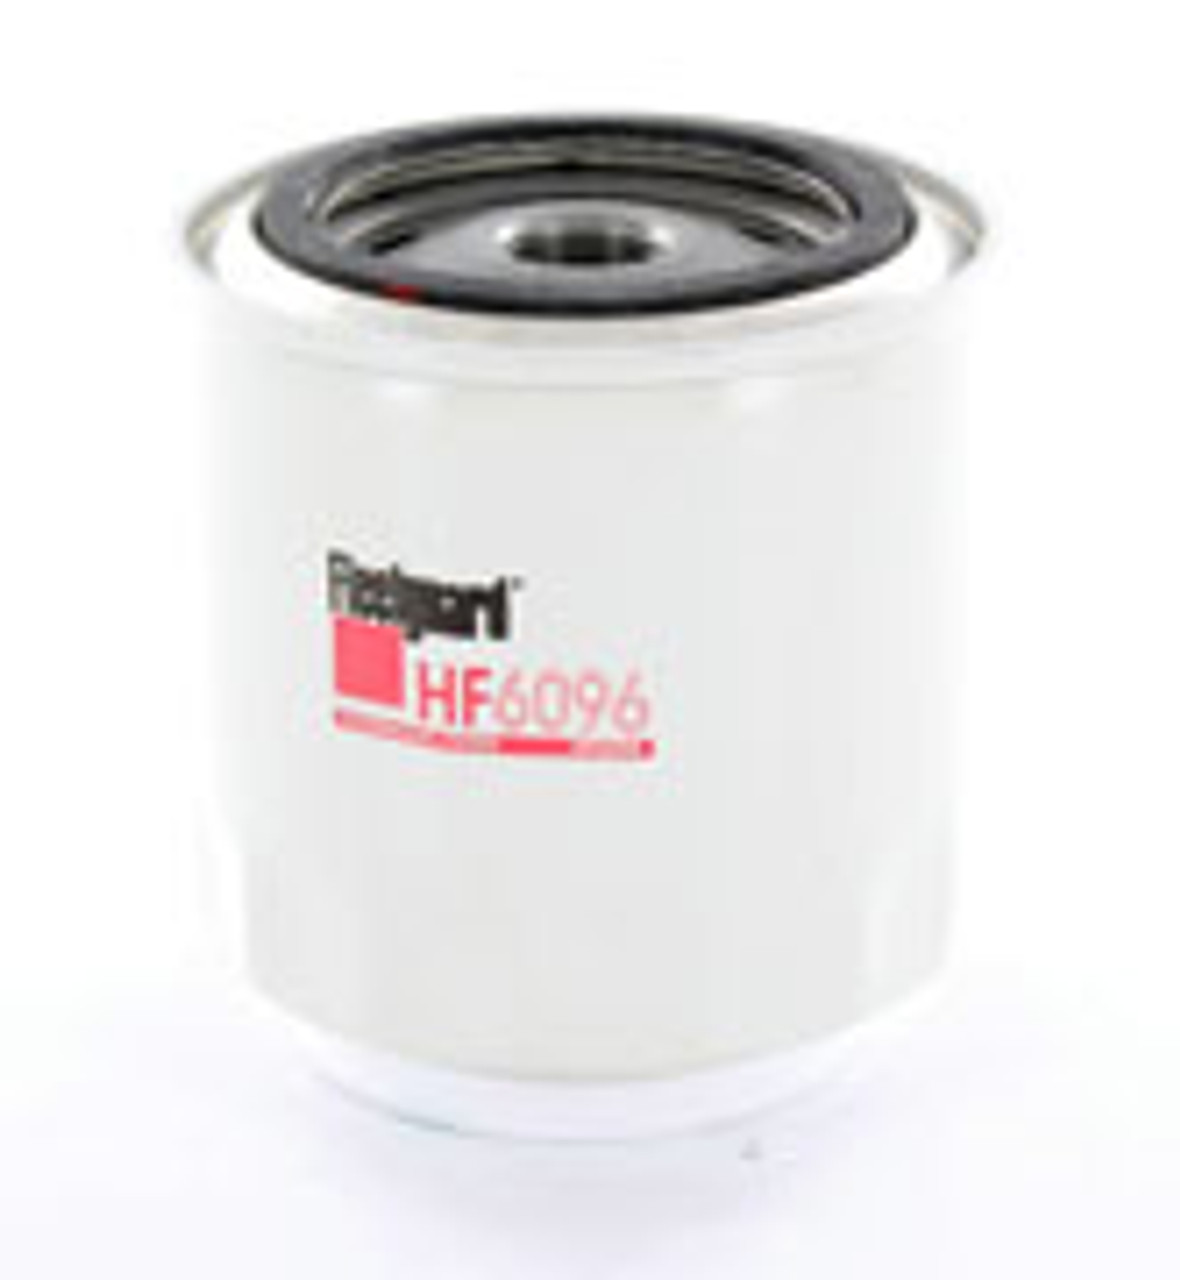 HF6096: Fleetguard Spin-On Hydraulic Filter